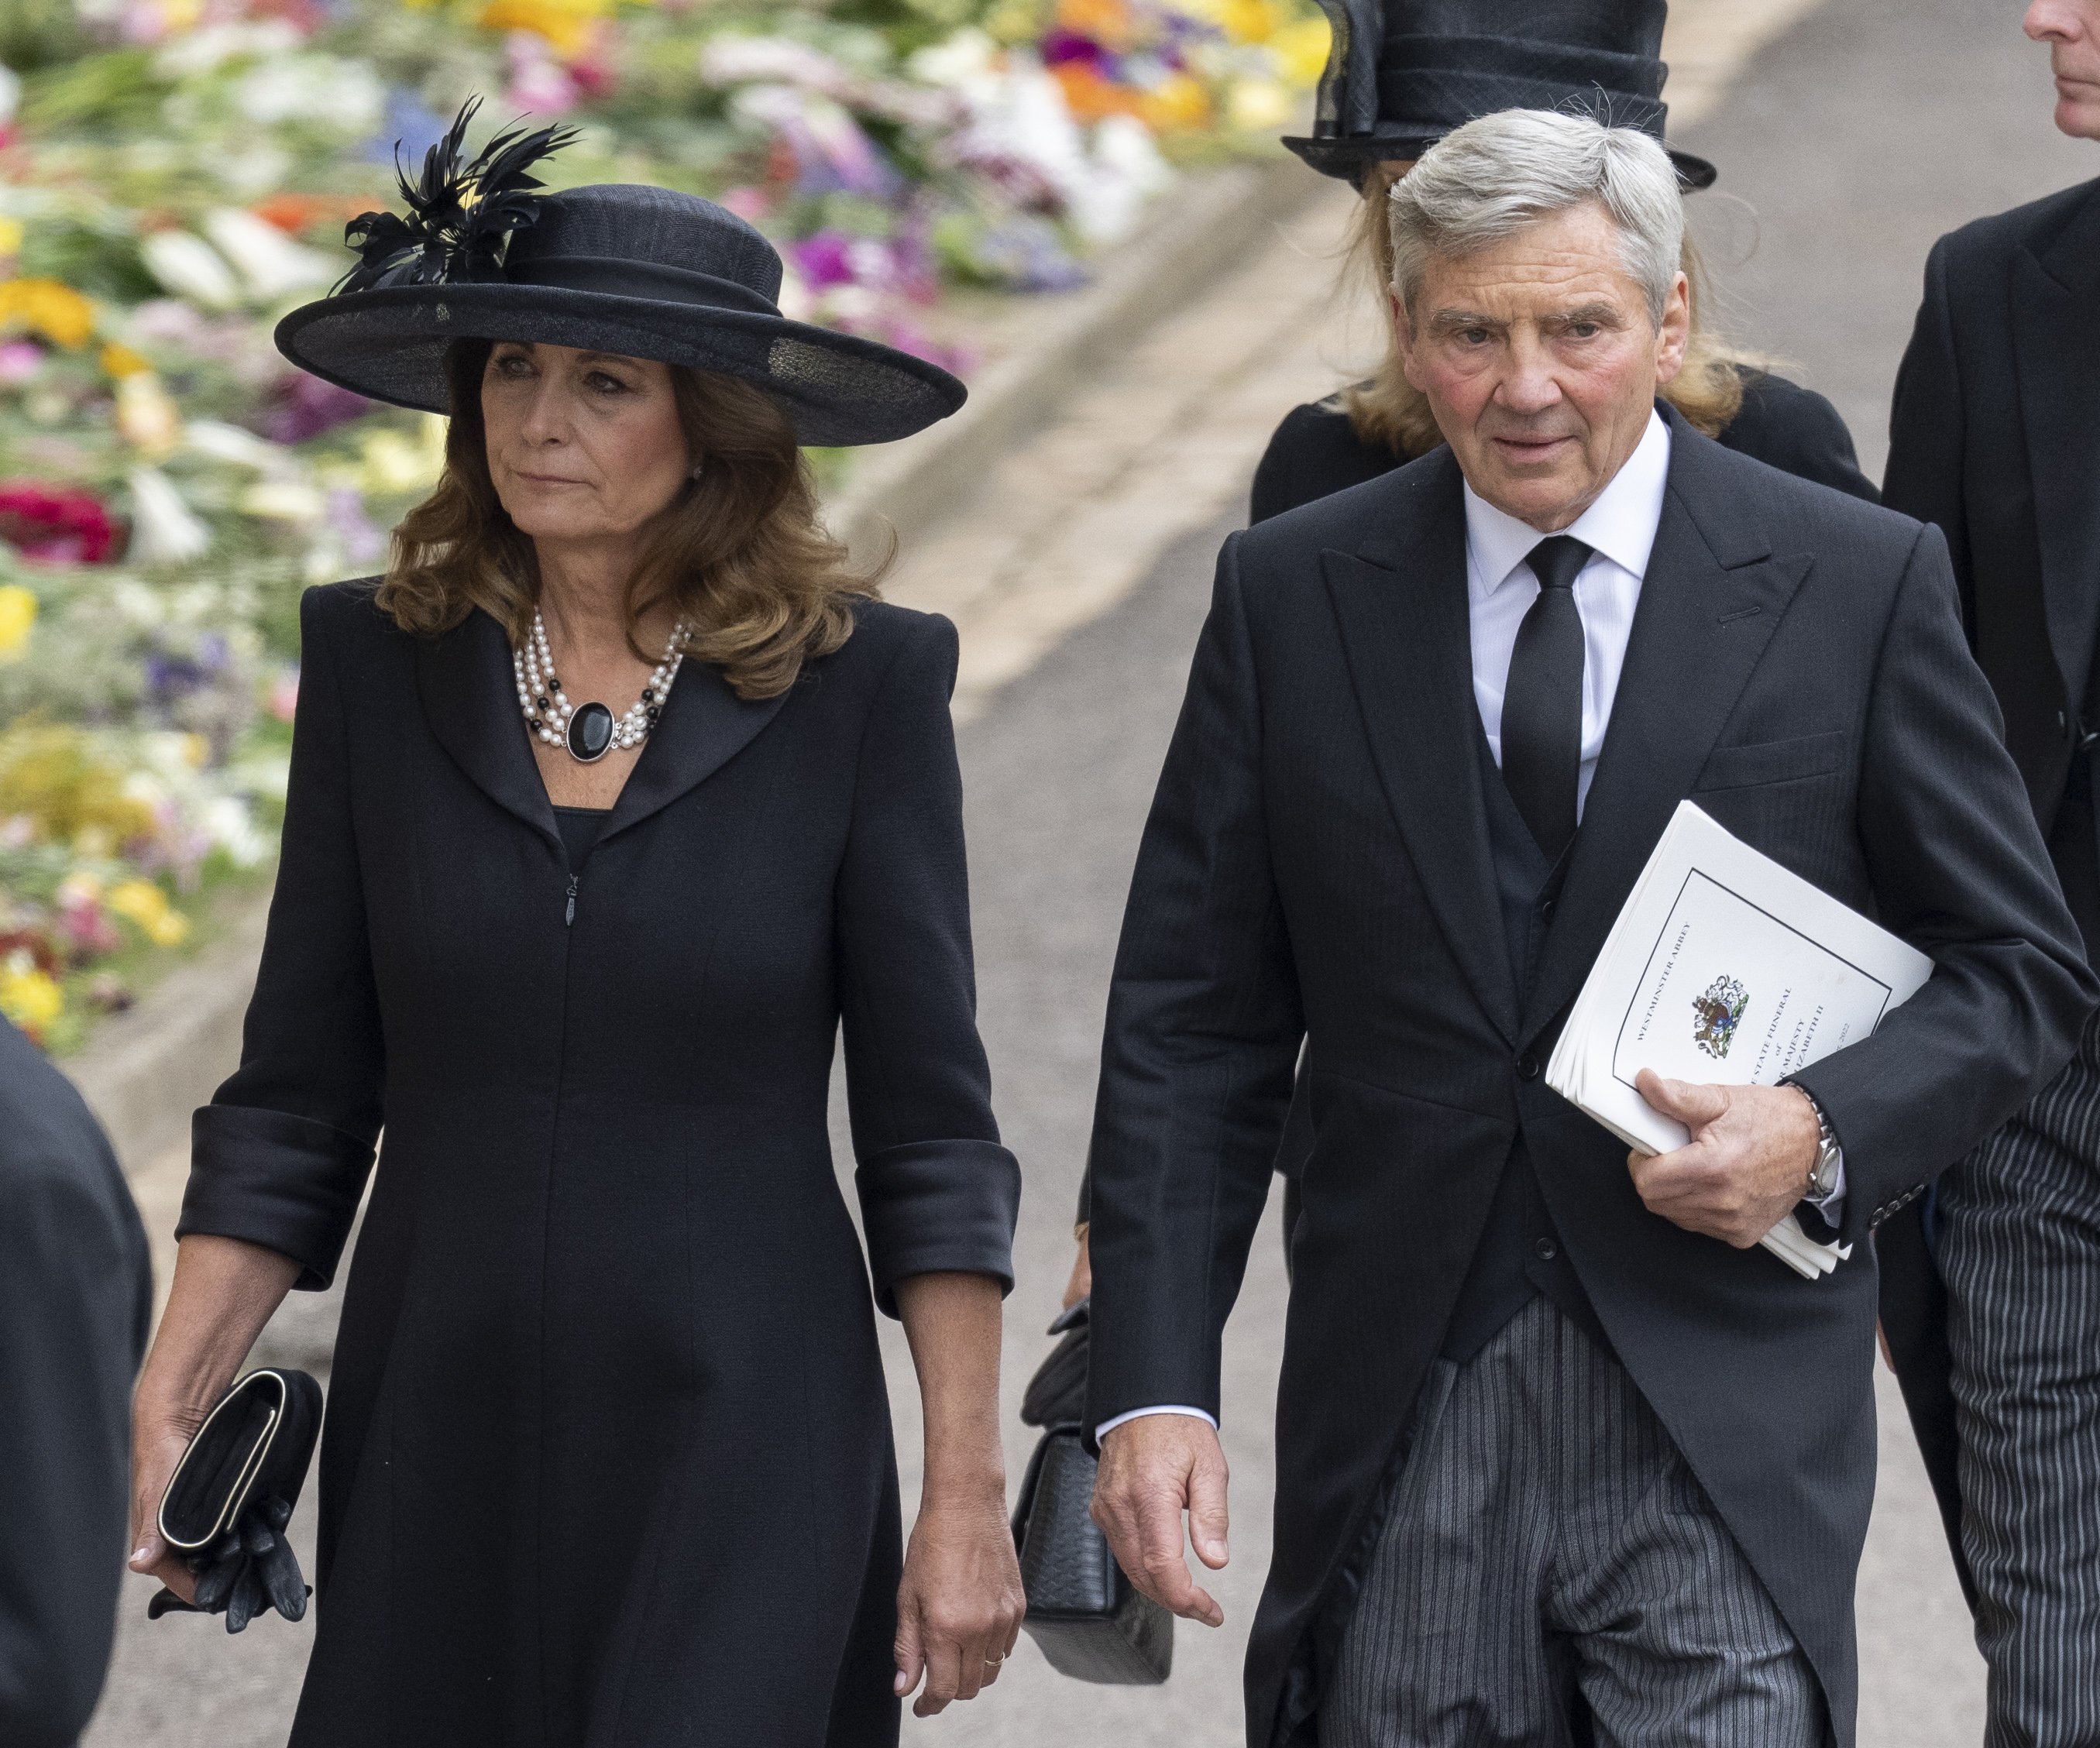 Carole Middleton and Michael Middleton at Windsor Castle on September 19, 2022 in Windsor, England. | Source: Getty Images